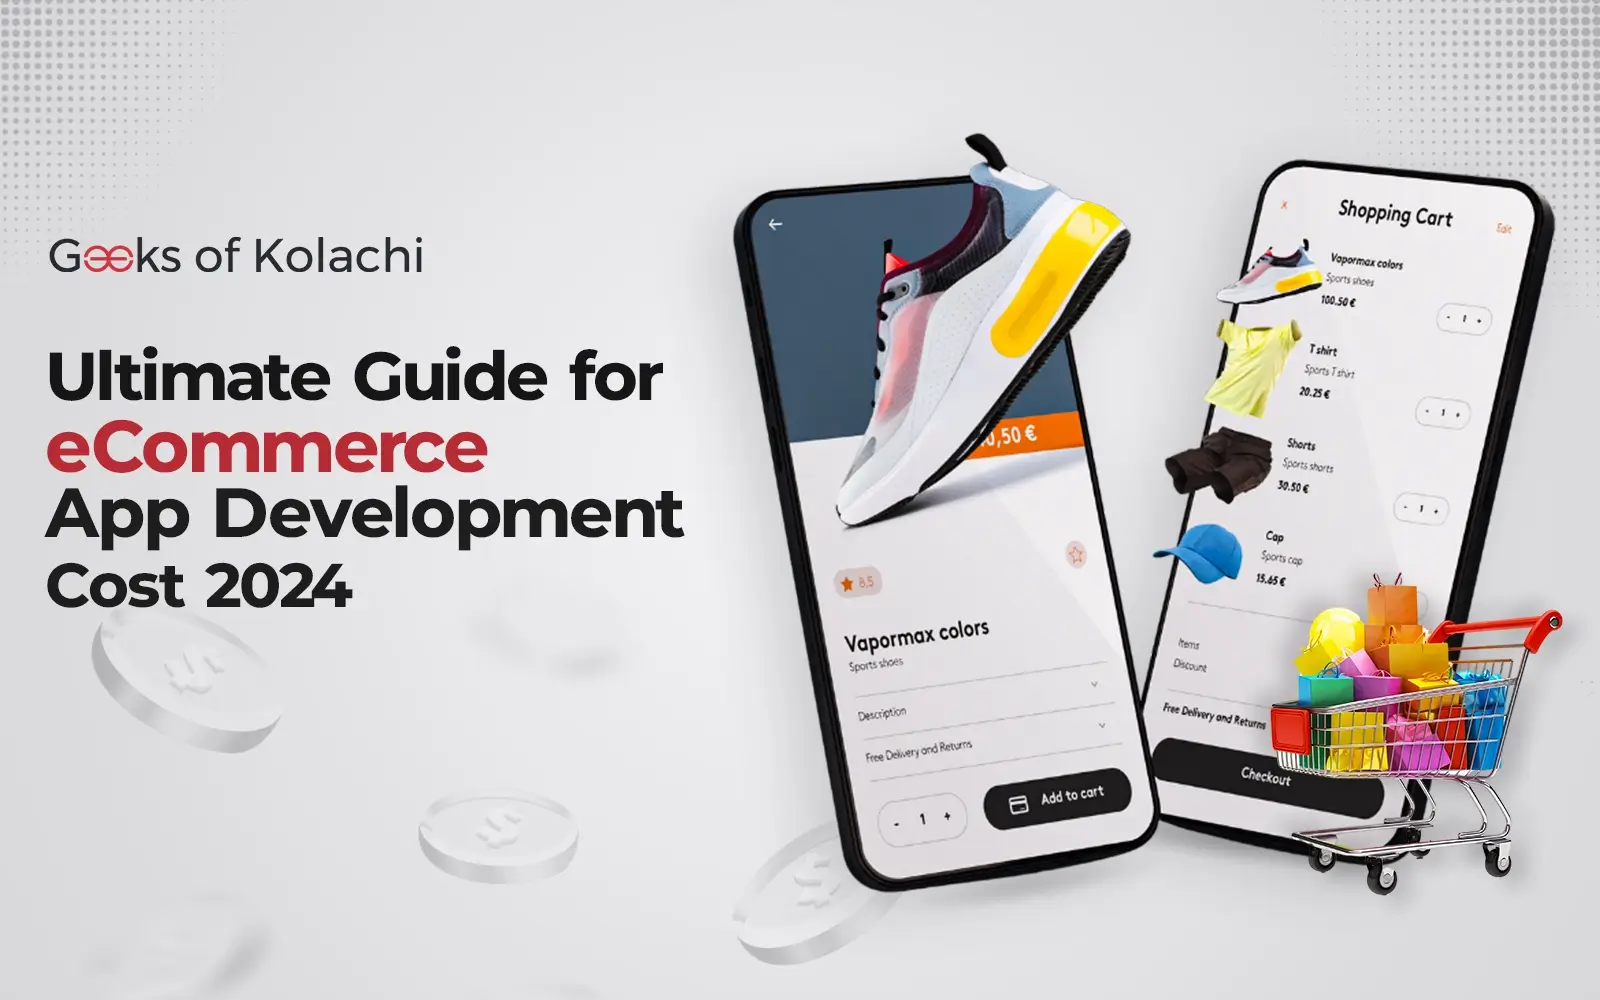 ecommerce-app-development-cost-by-geeks-of-kolachi